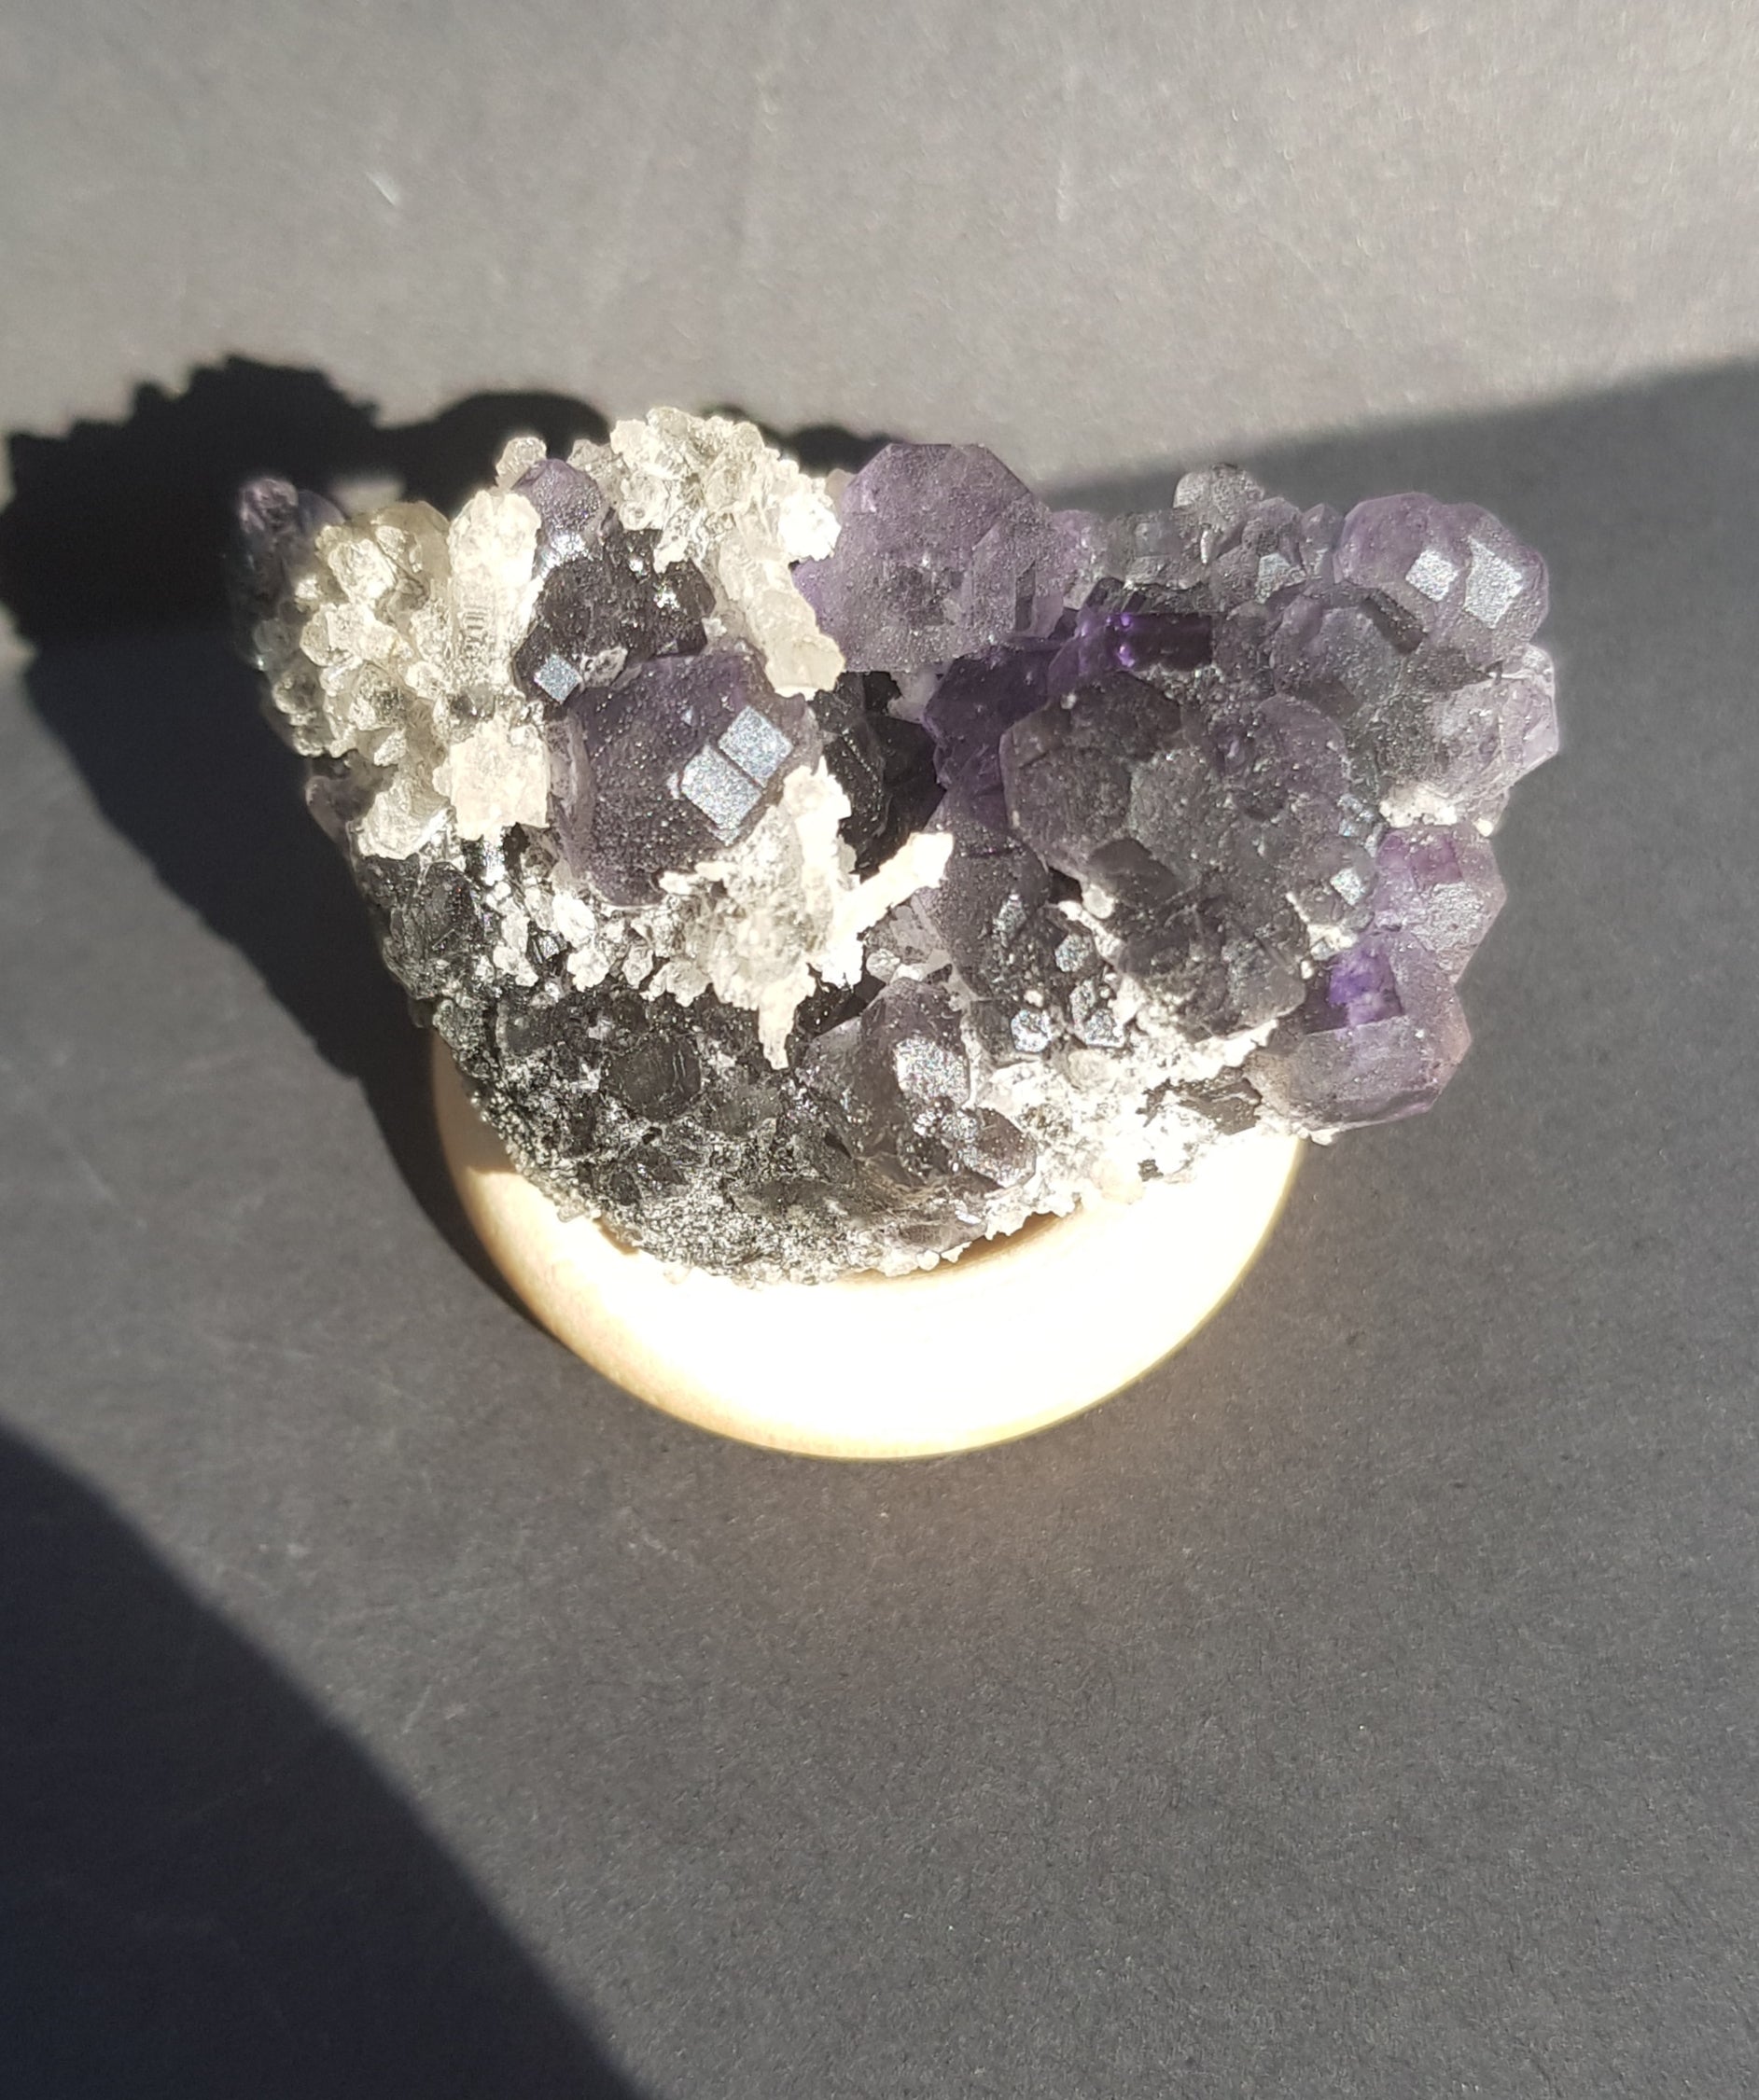 Fluorite - cubic formation - with quartz